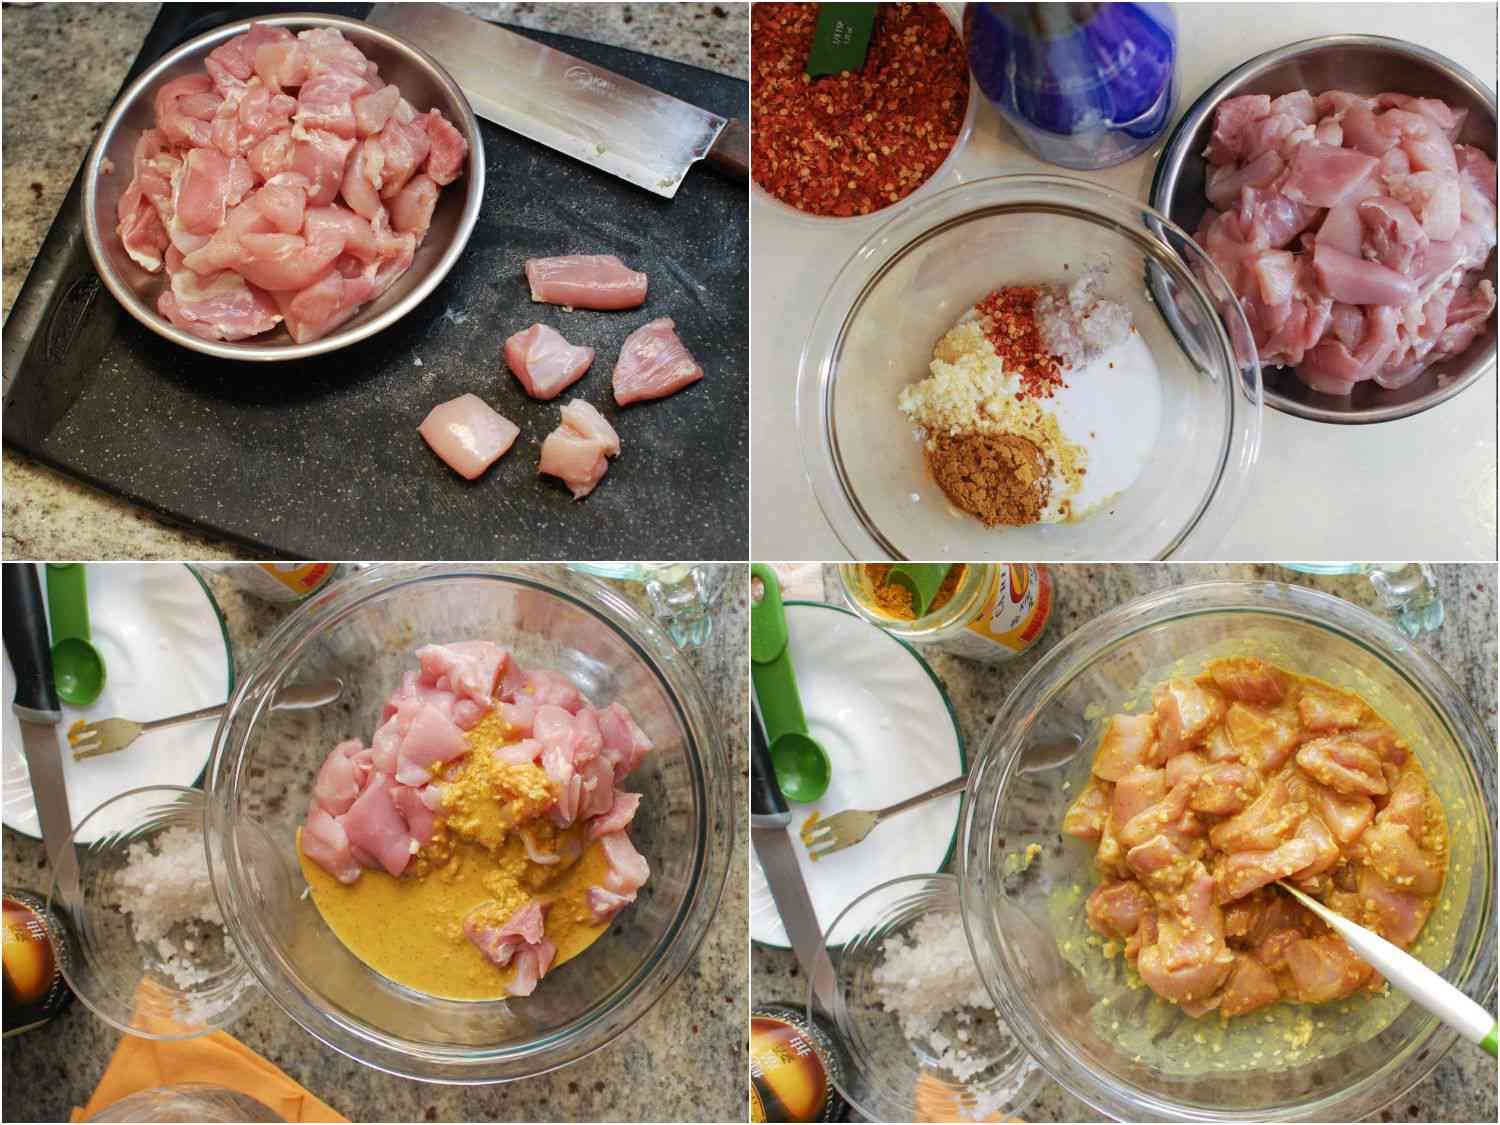 09102015 -烤咖喱鸡-烤肉串shaozhizhong - 1 - 4 - collage.jpg